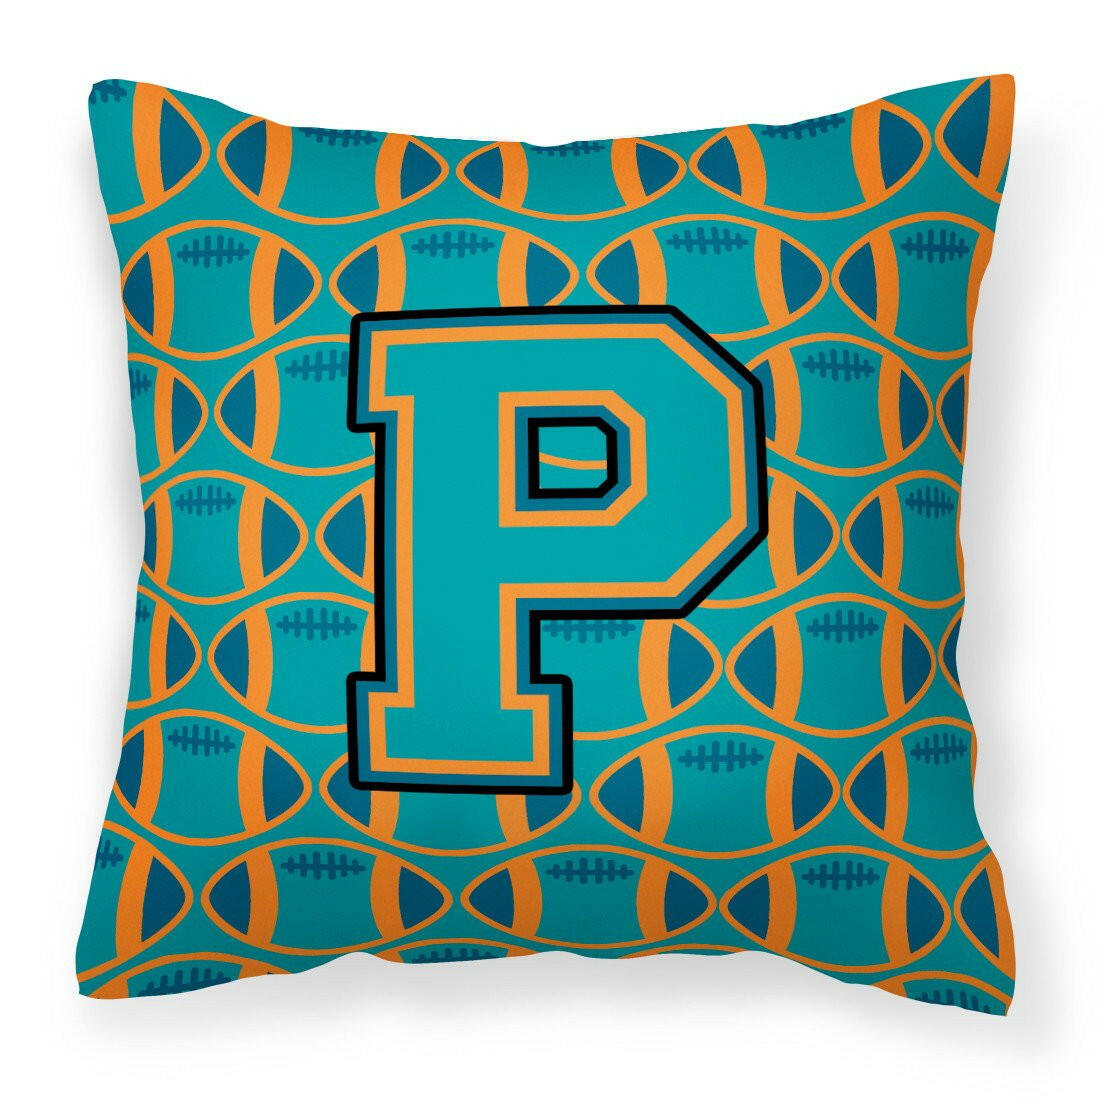 Letter P Football Aqua, Orange and Marine Blue Fabric Decorative Pillow CJ1063-PPW1414 by Caroline's Treasures